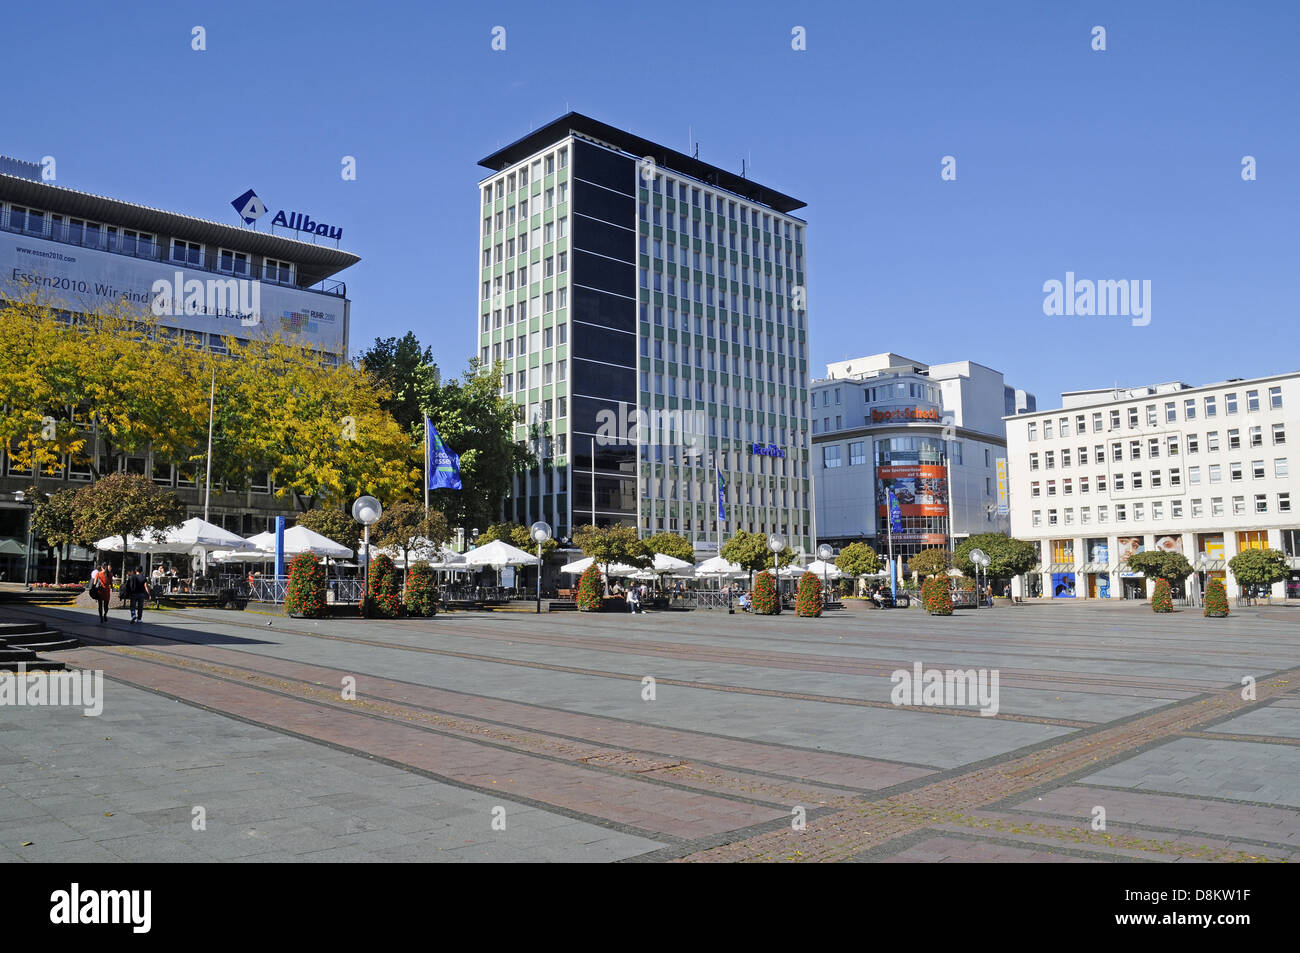 Kennedyplatz square Stock Photo